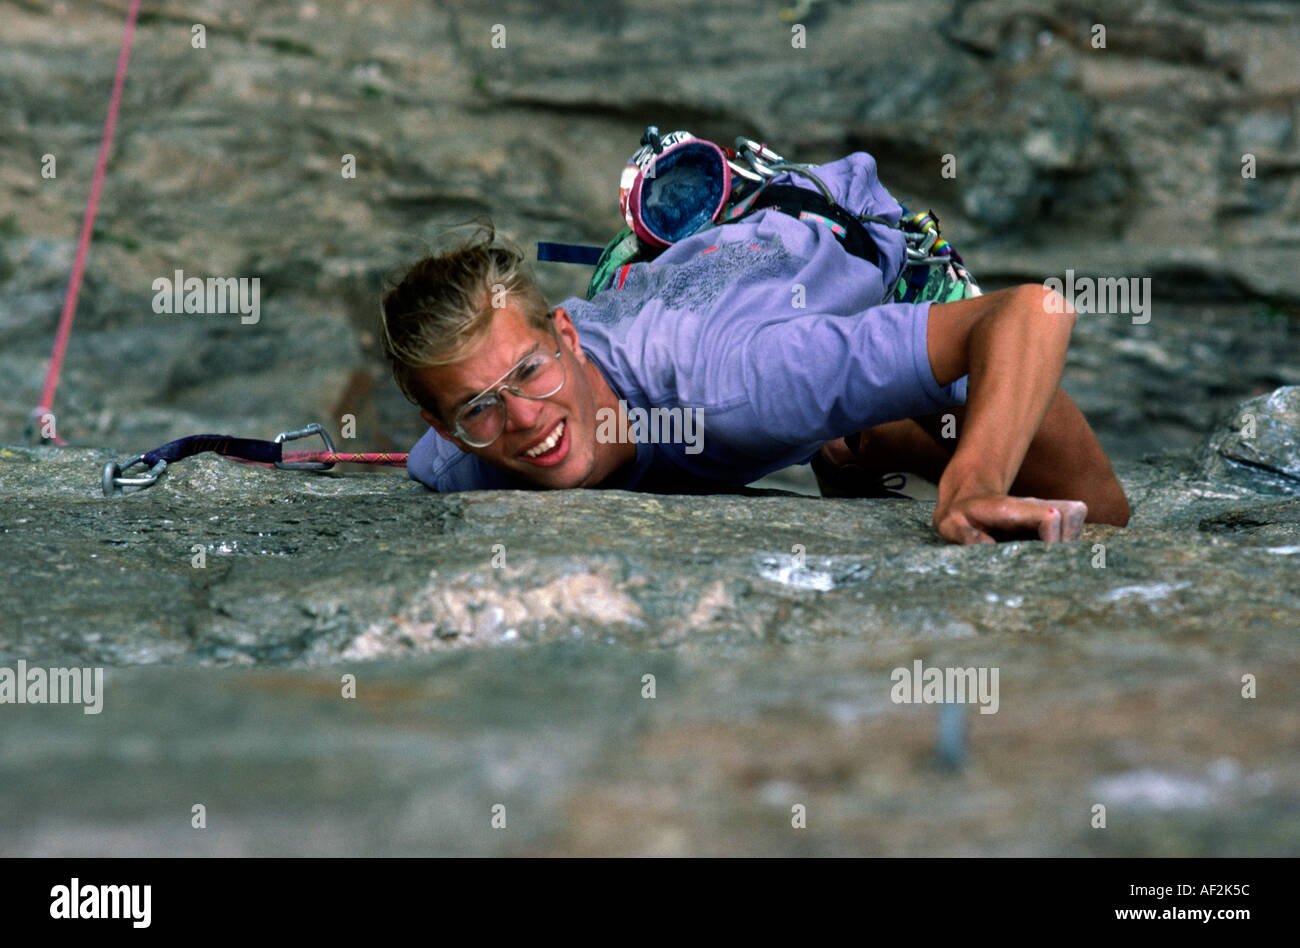 Bild CREDIT DOUG BLANE Klettern in Chamonix Frankreich Stockfoto